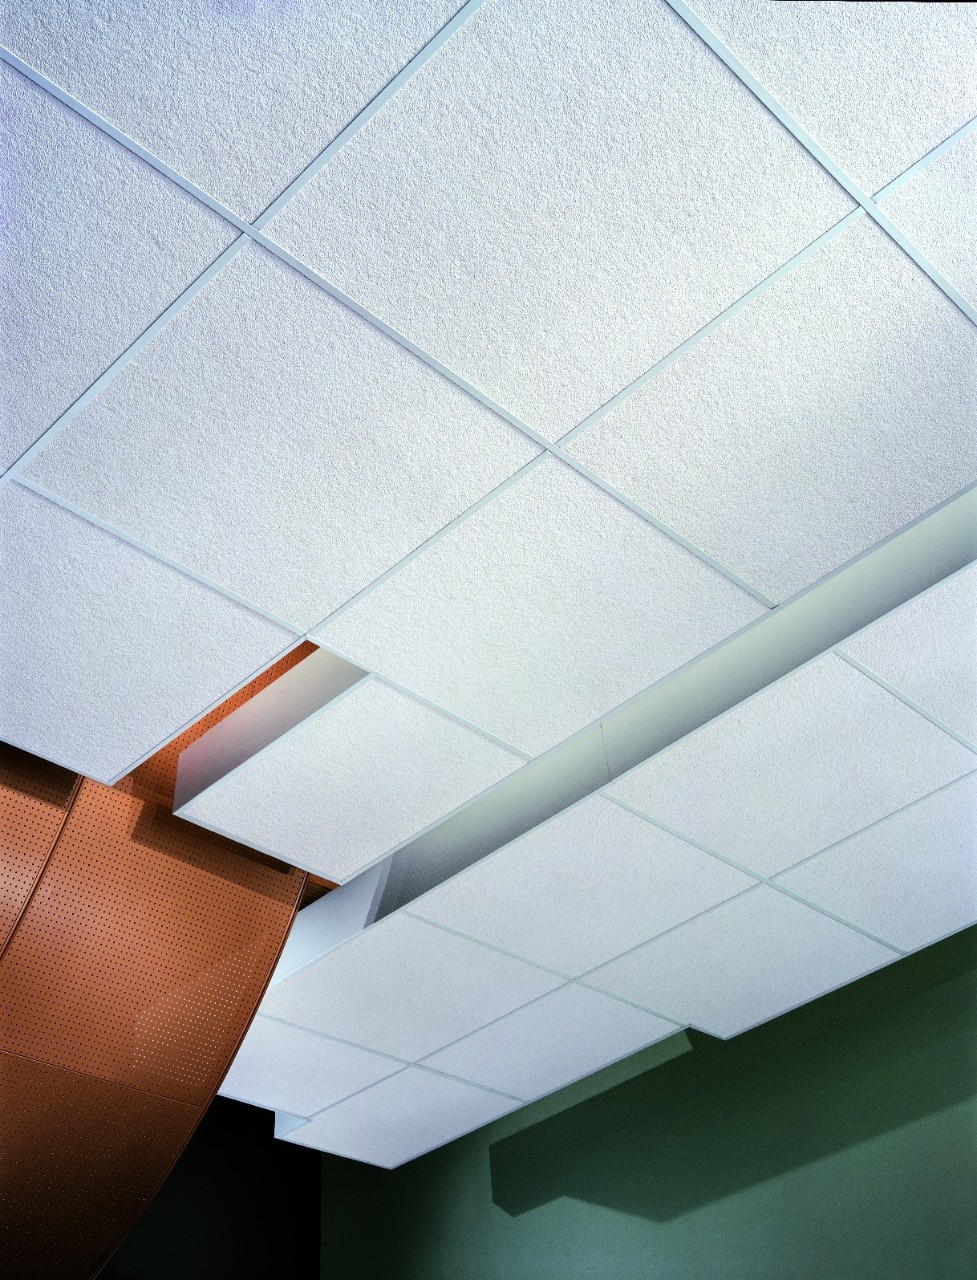 Mildew Resistant Drop Ceiling Tilesusg astro acoustical panels fire rated ceiling tiles